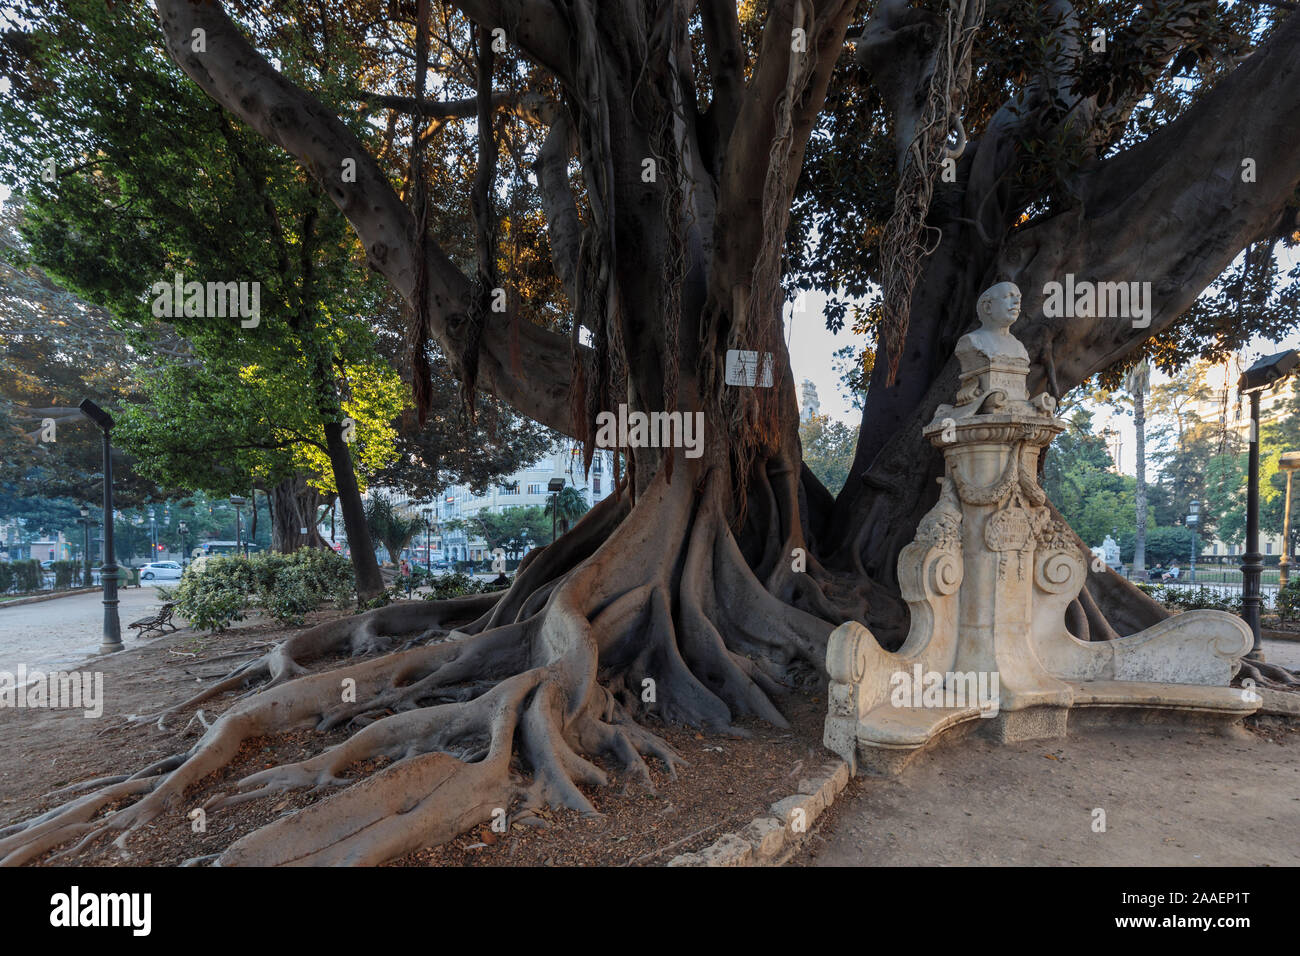 The Strangler Tree, Moreton Bay Fig tree, (Ficus macrophylla), originally imported from Australia. Valencia, Spain, Europe Stock Photo